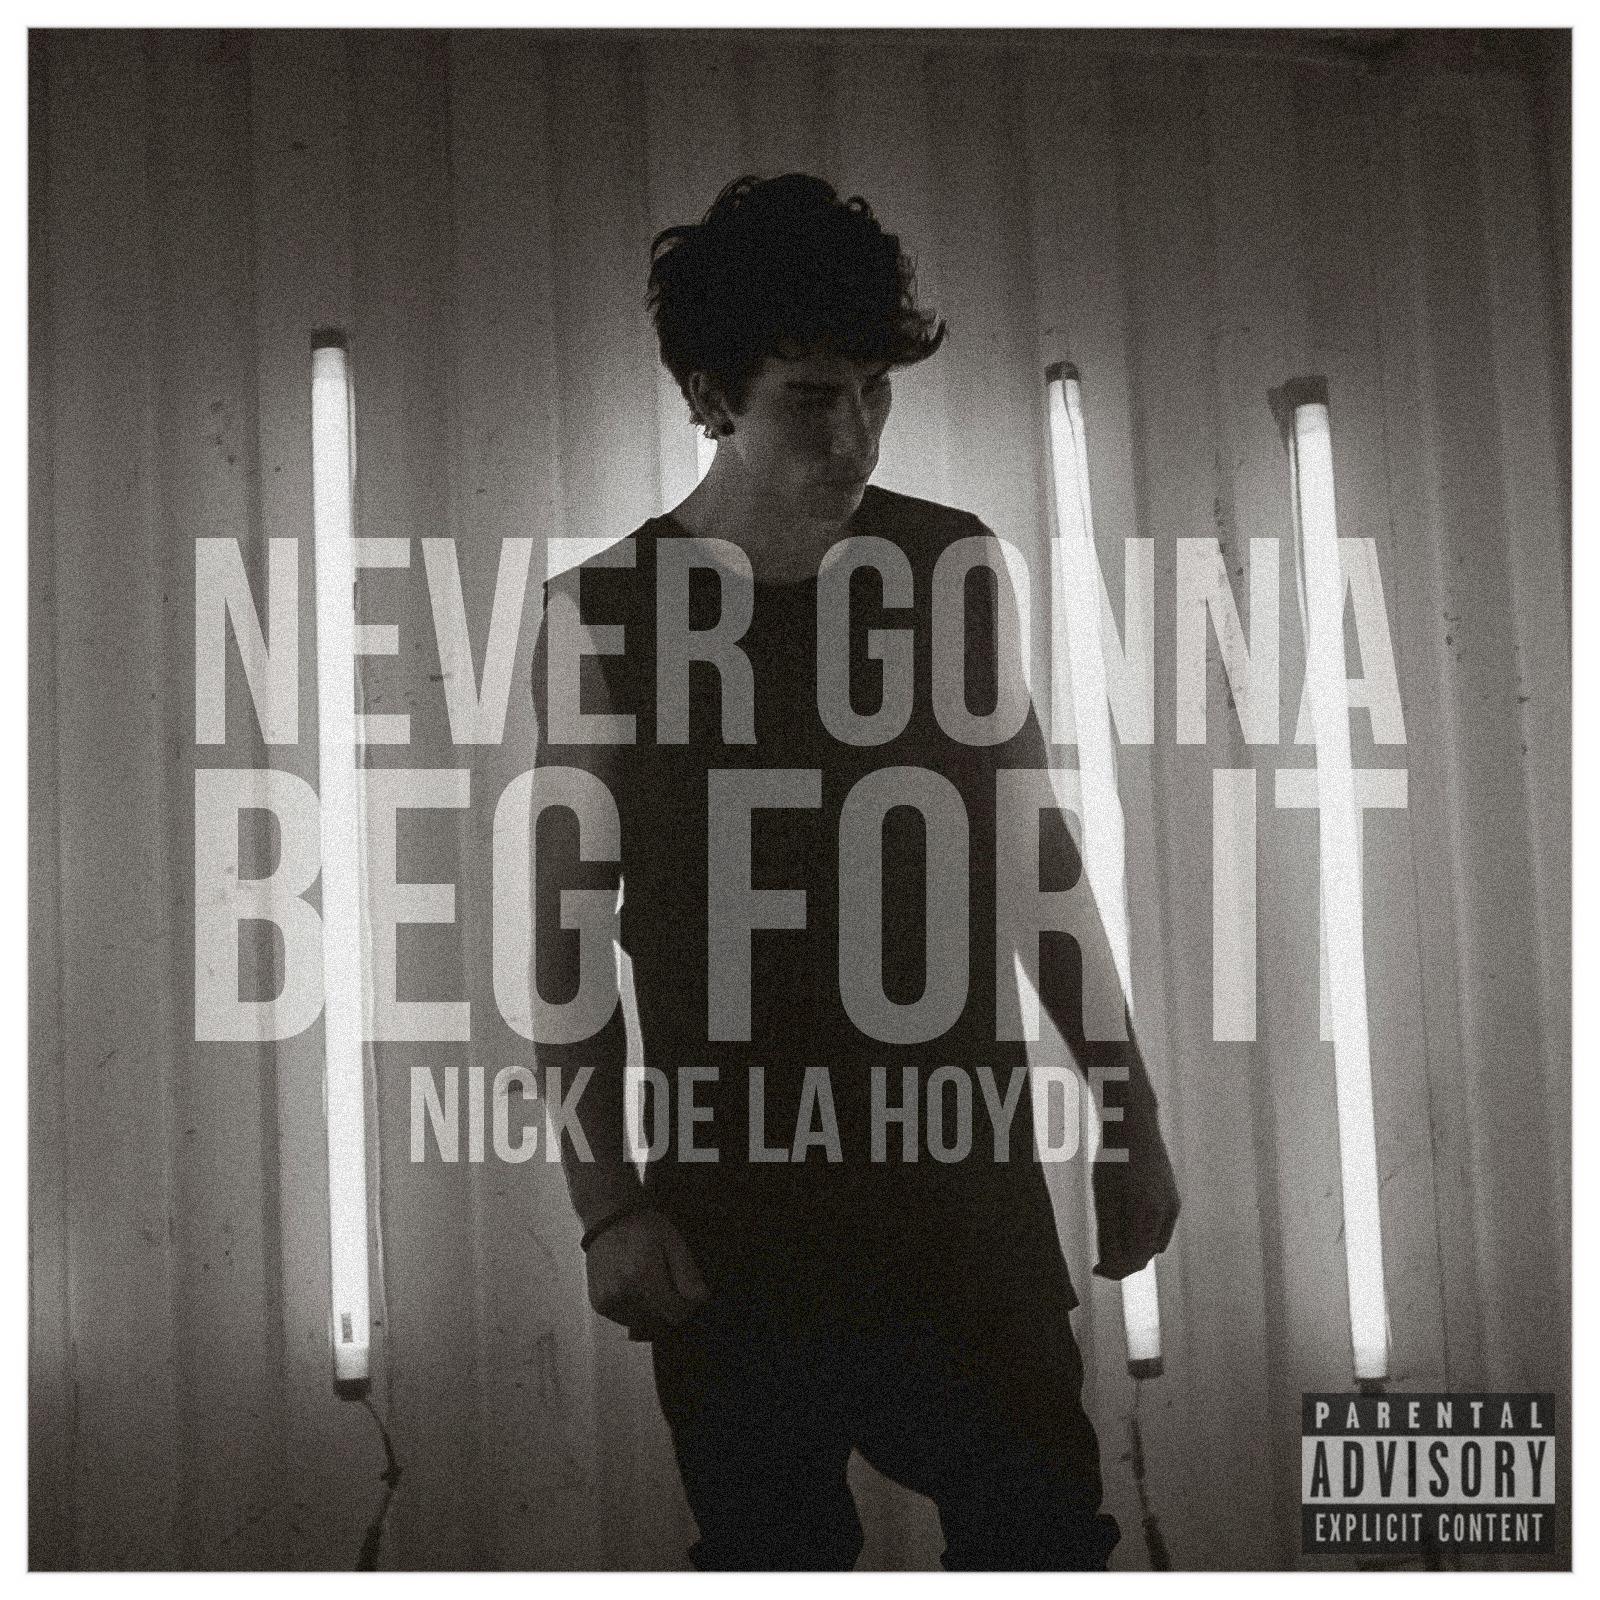 Nick de la Hoyde "Never Gonna Beg For It"